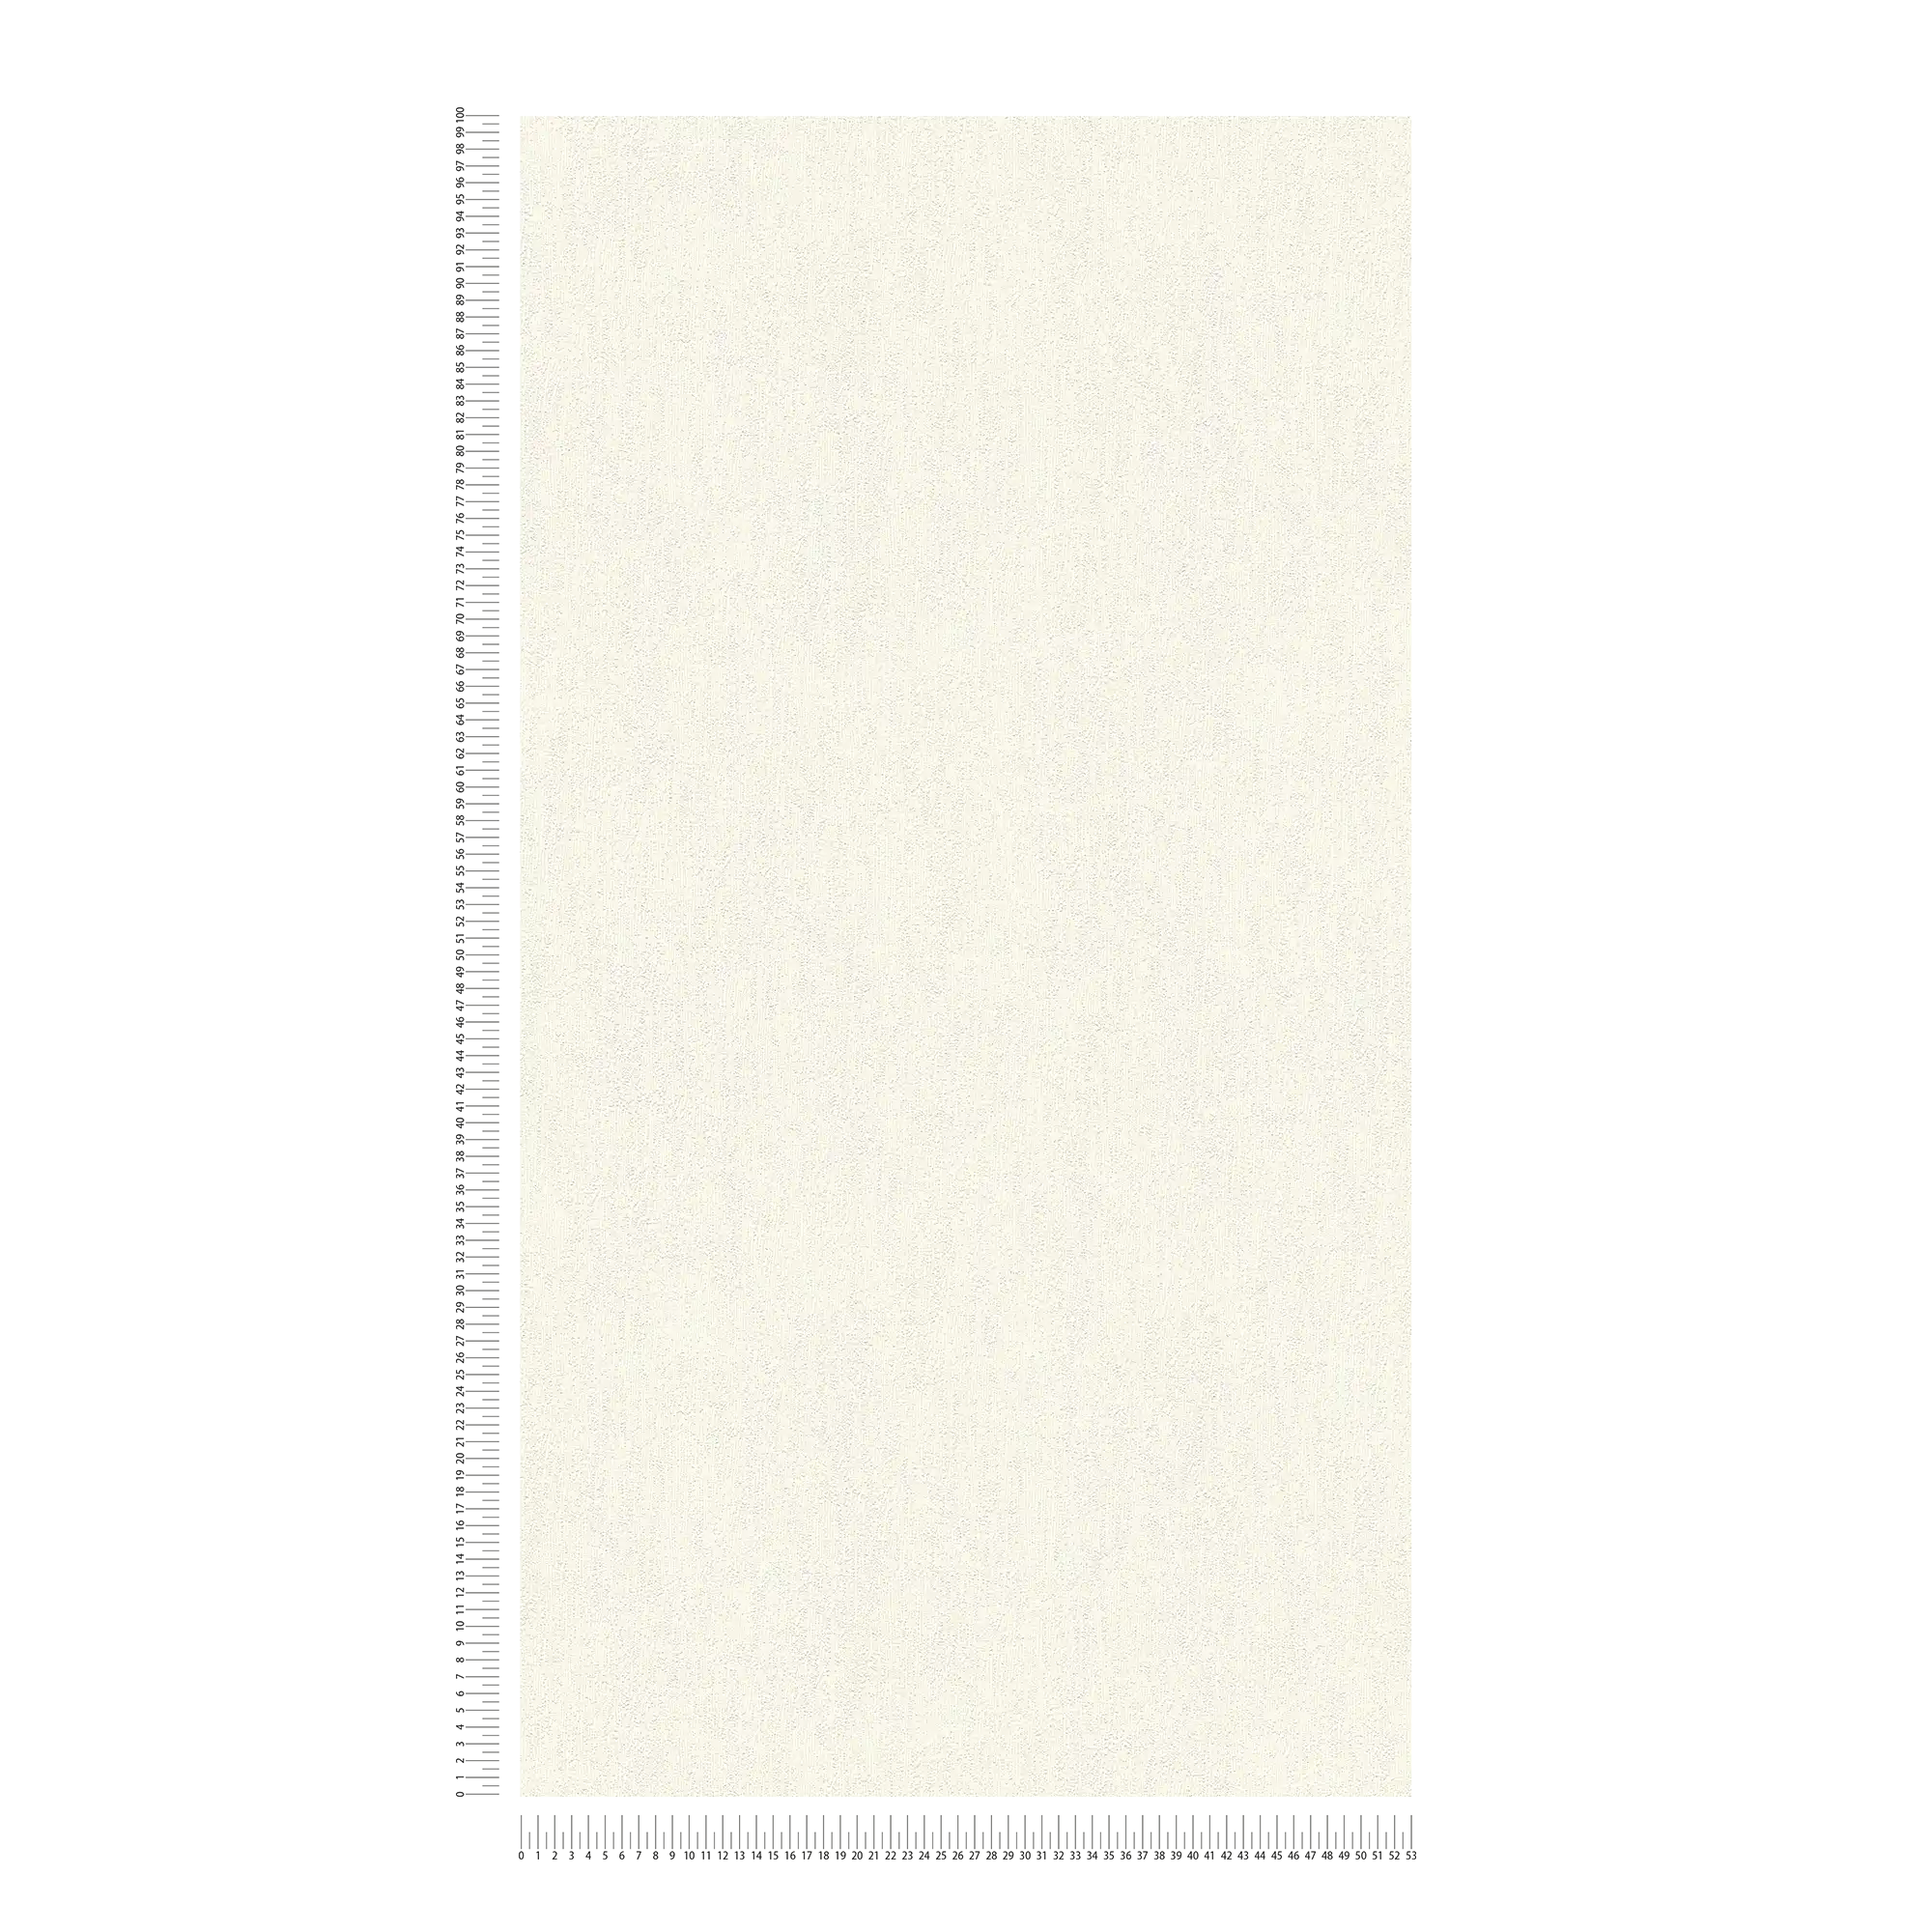             Carta da parati bianca liscia con struttura in legno a grana grossa
        